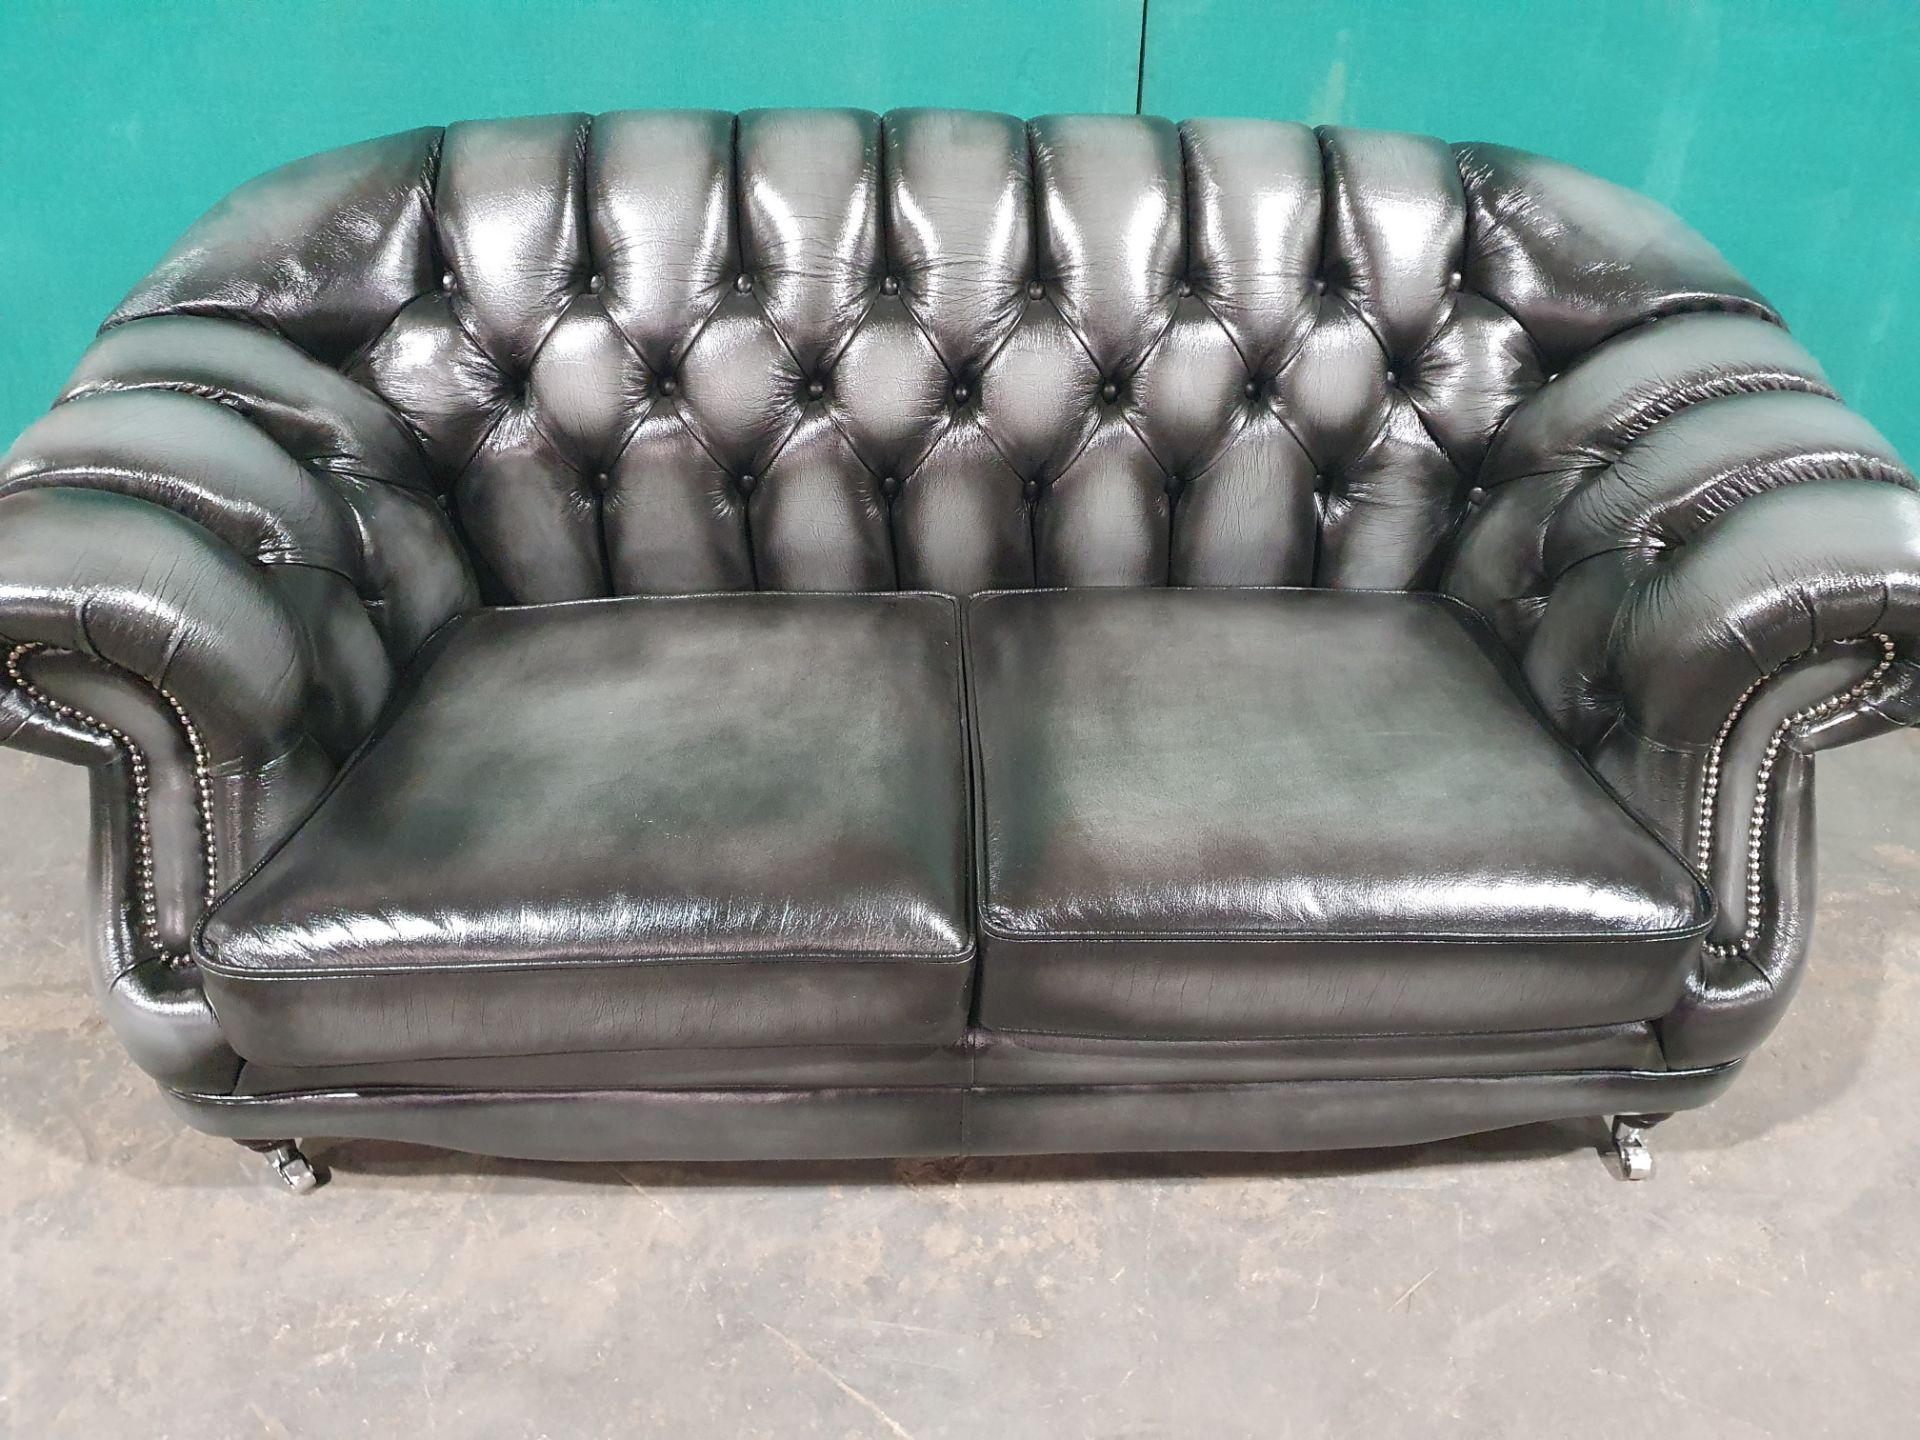 Two Seater Grosvenor Sofa - Image 4 of 7